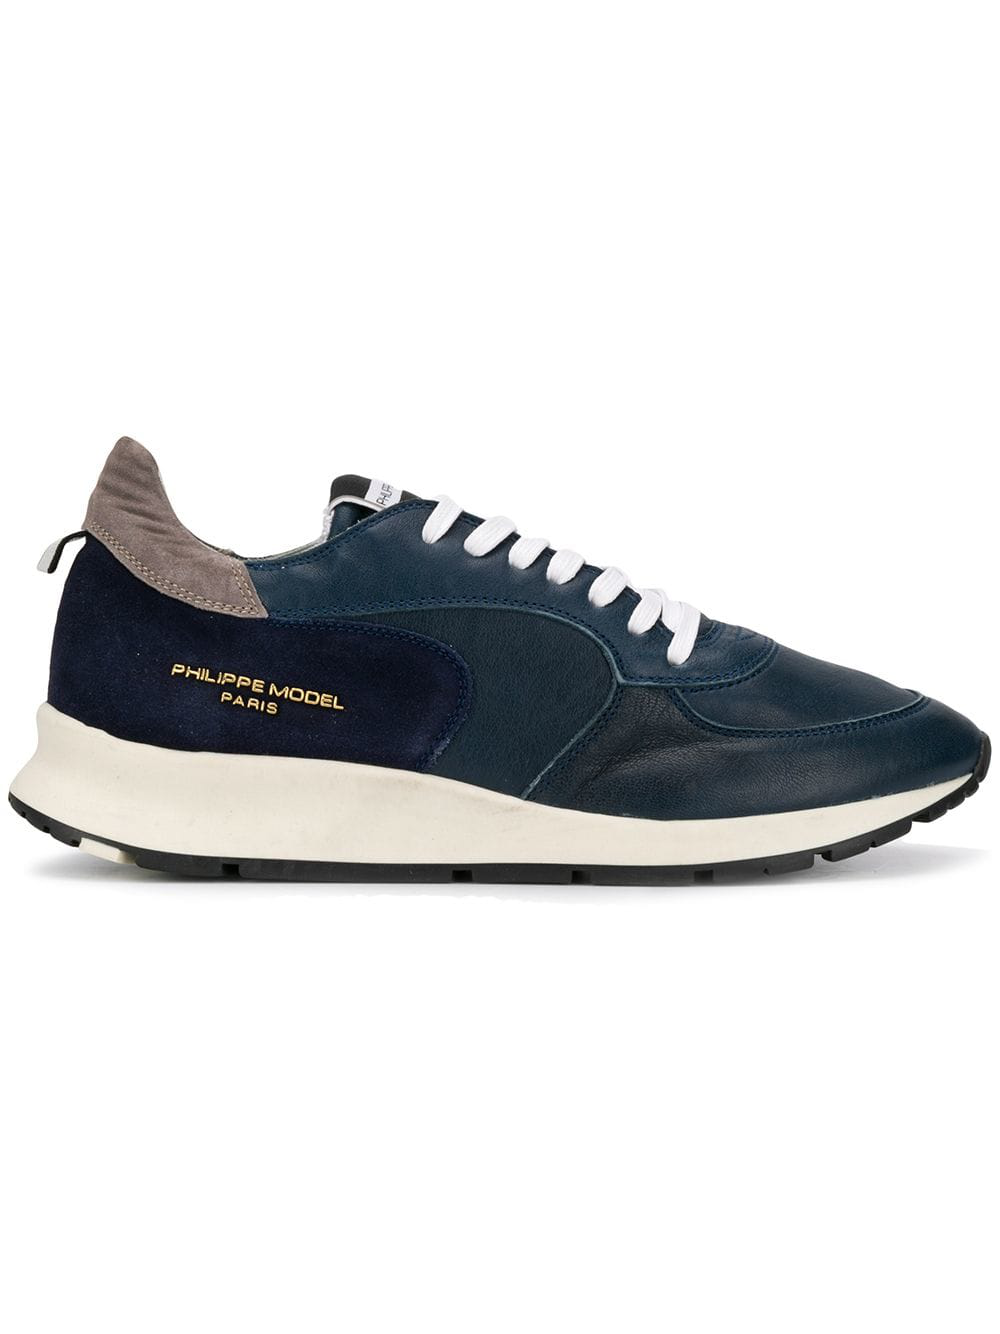 Philippe Model Montecarlo Sneakers - Blue | ModeSens